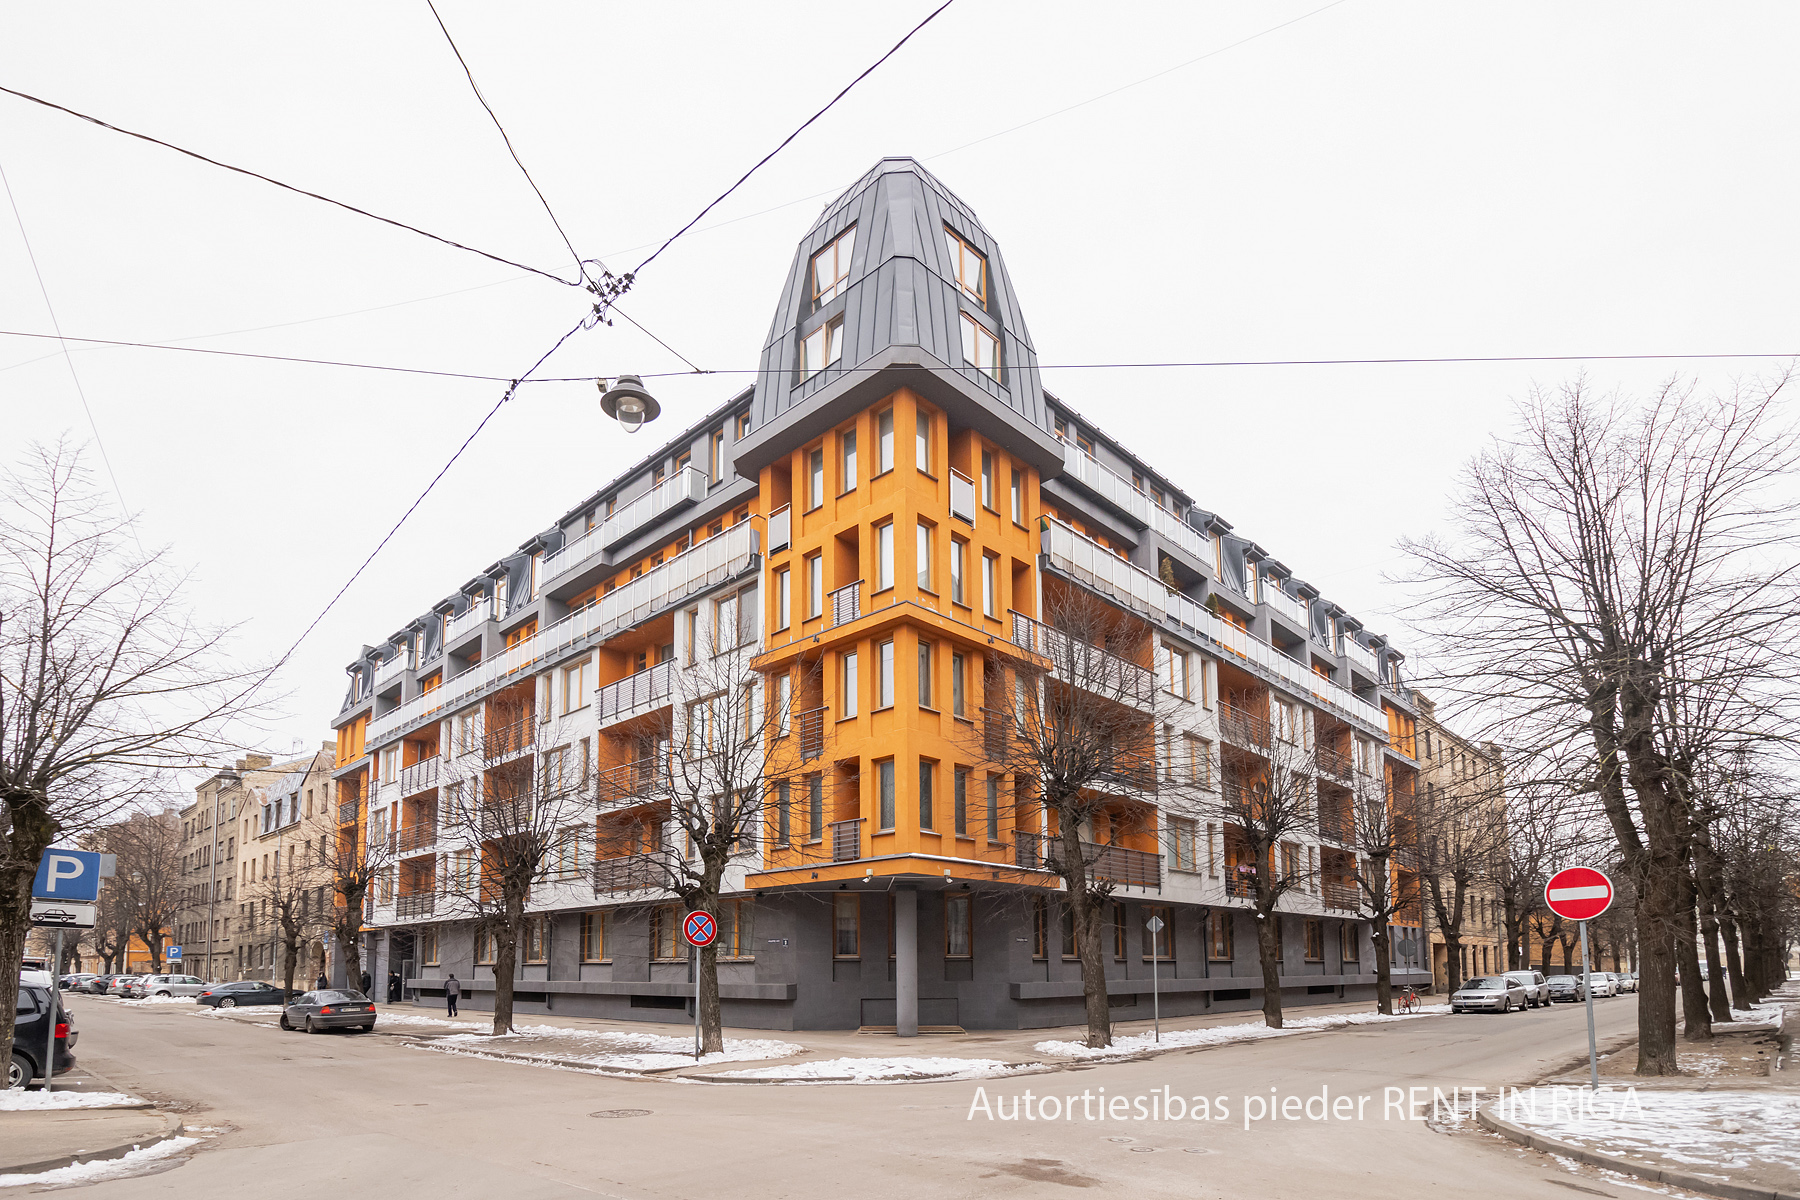 Apartment for rent, Alauksta street 9 - Image 1